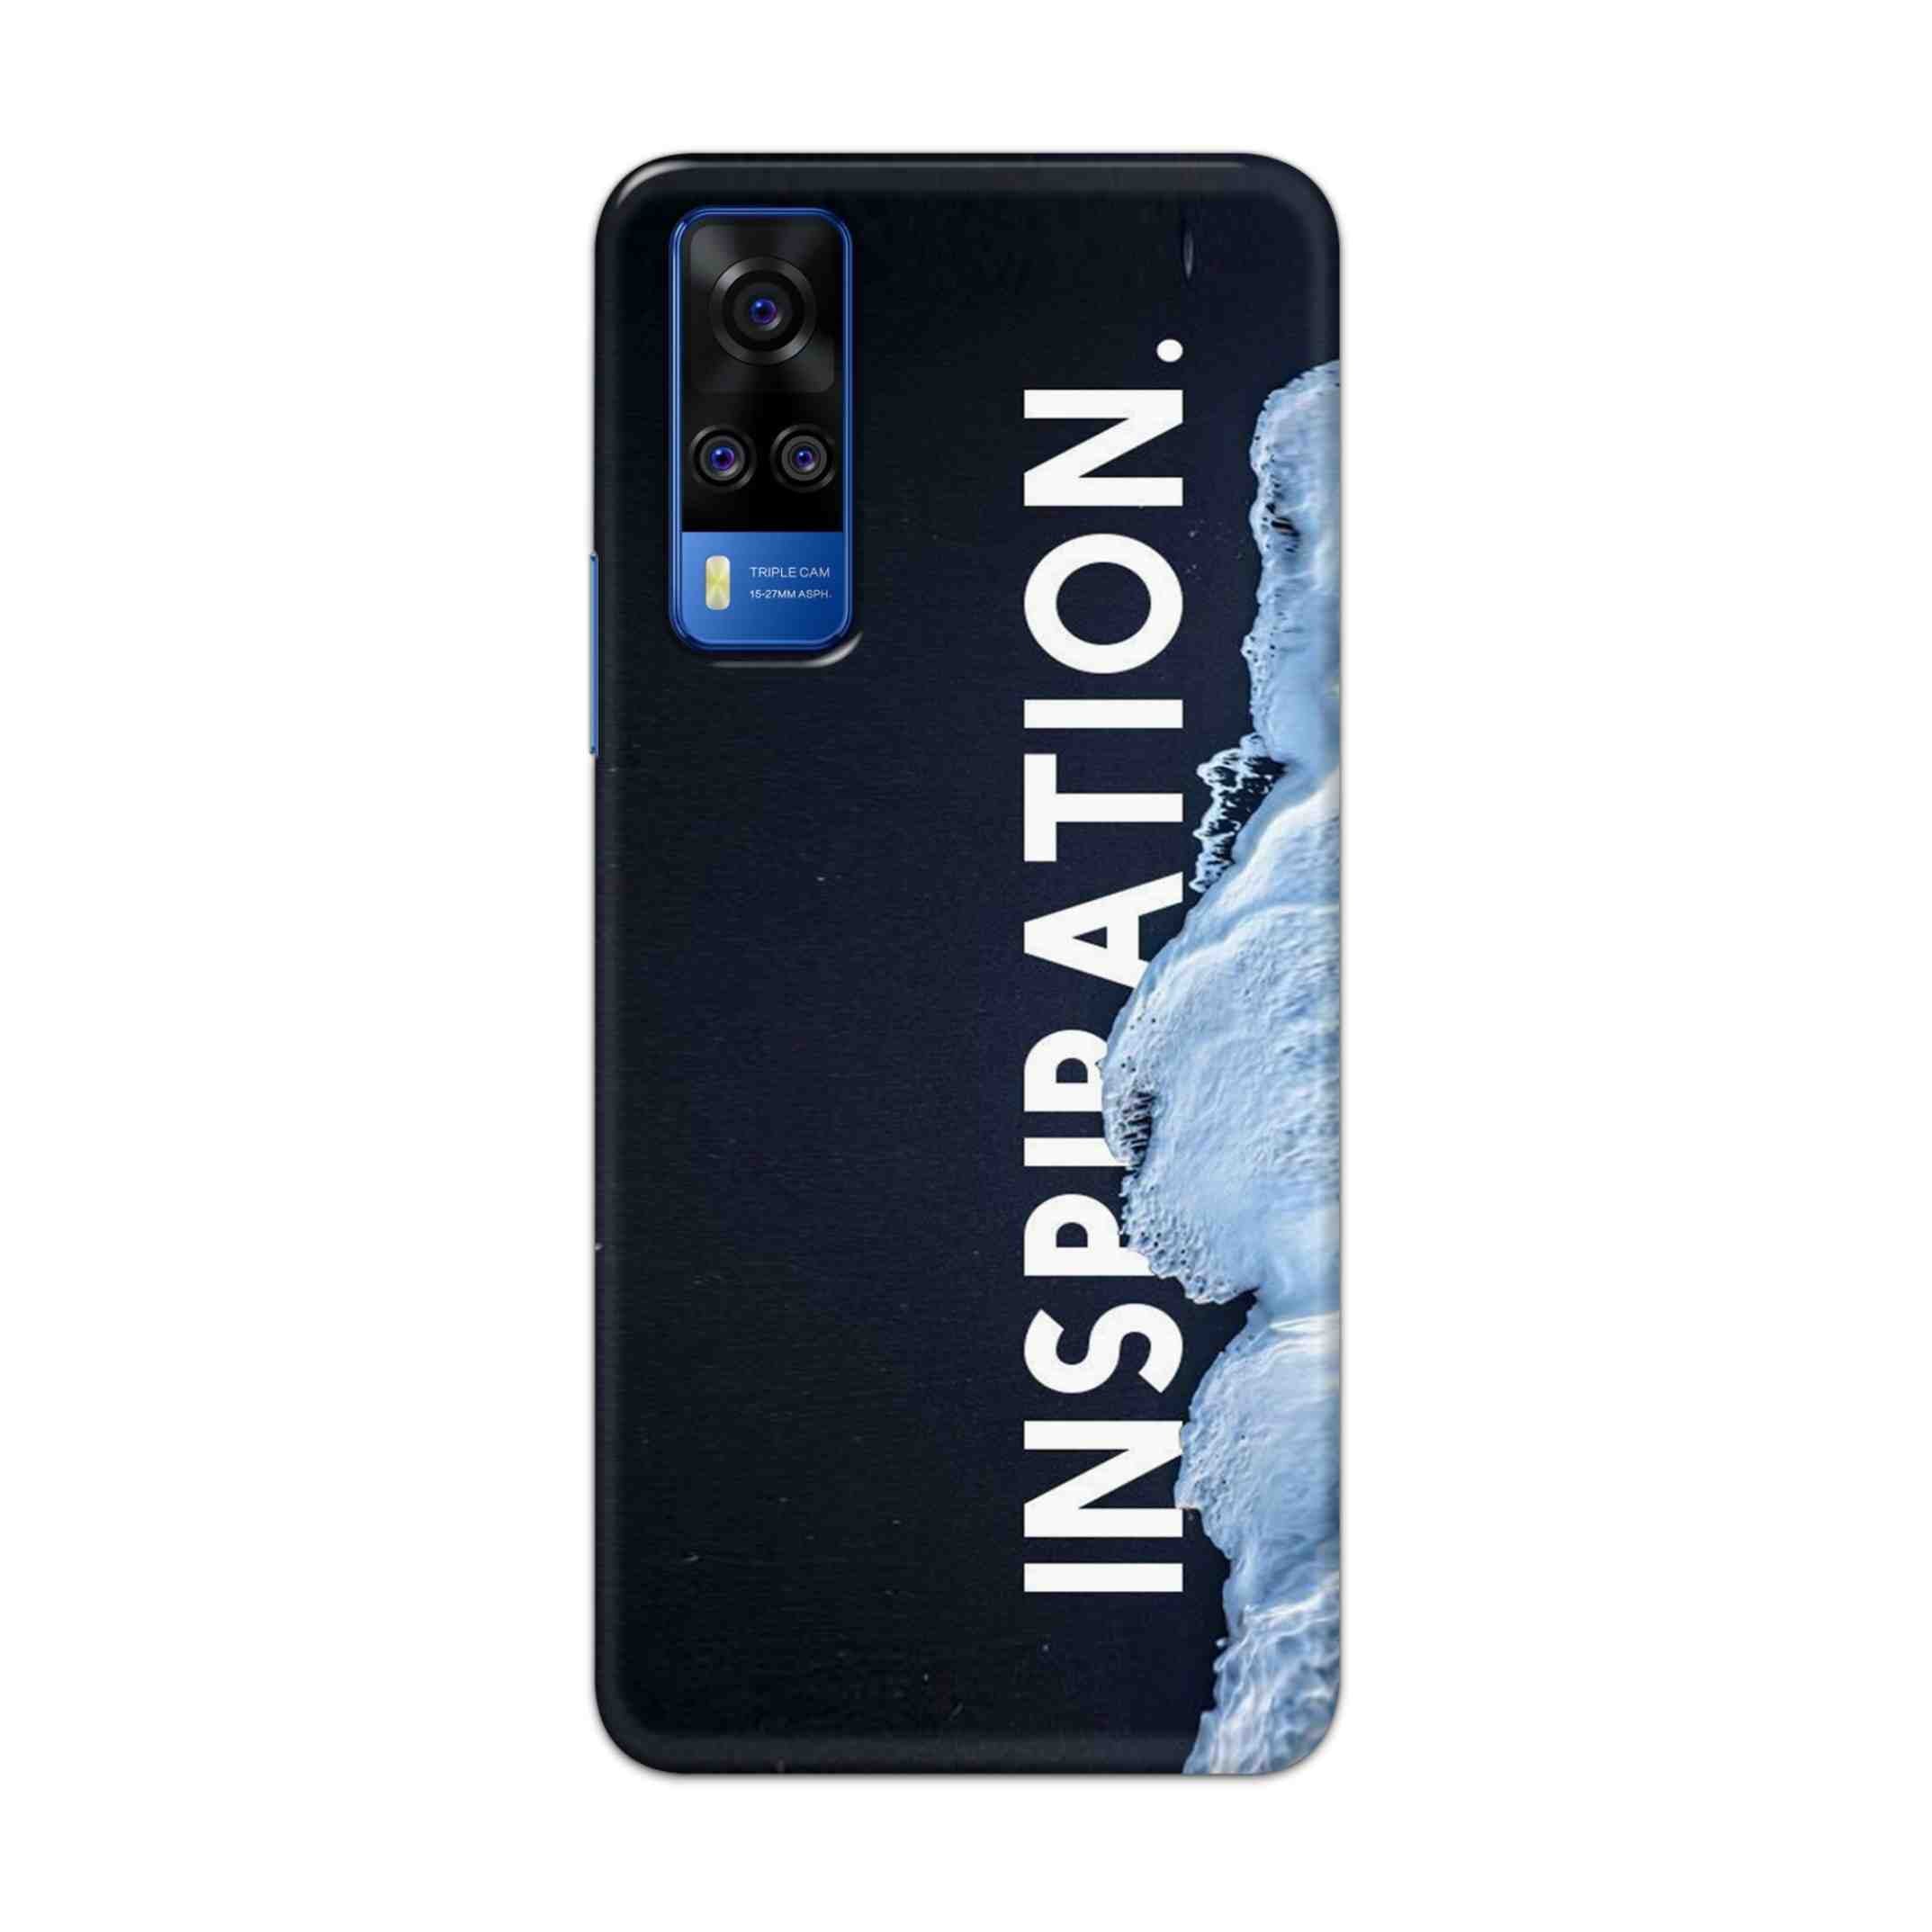 Buy Inspiration Hard Back Mobile Phone Case Cover For Vivo Y51a Online